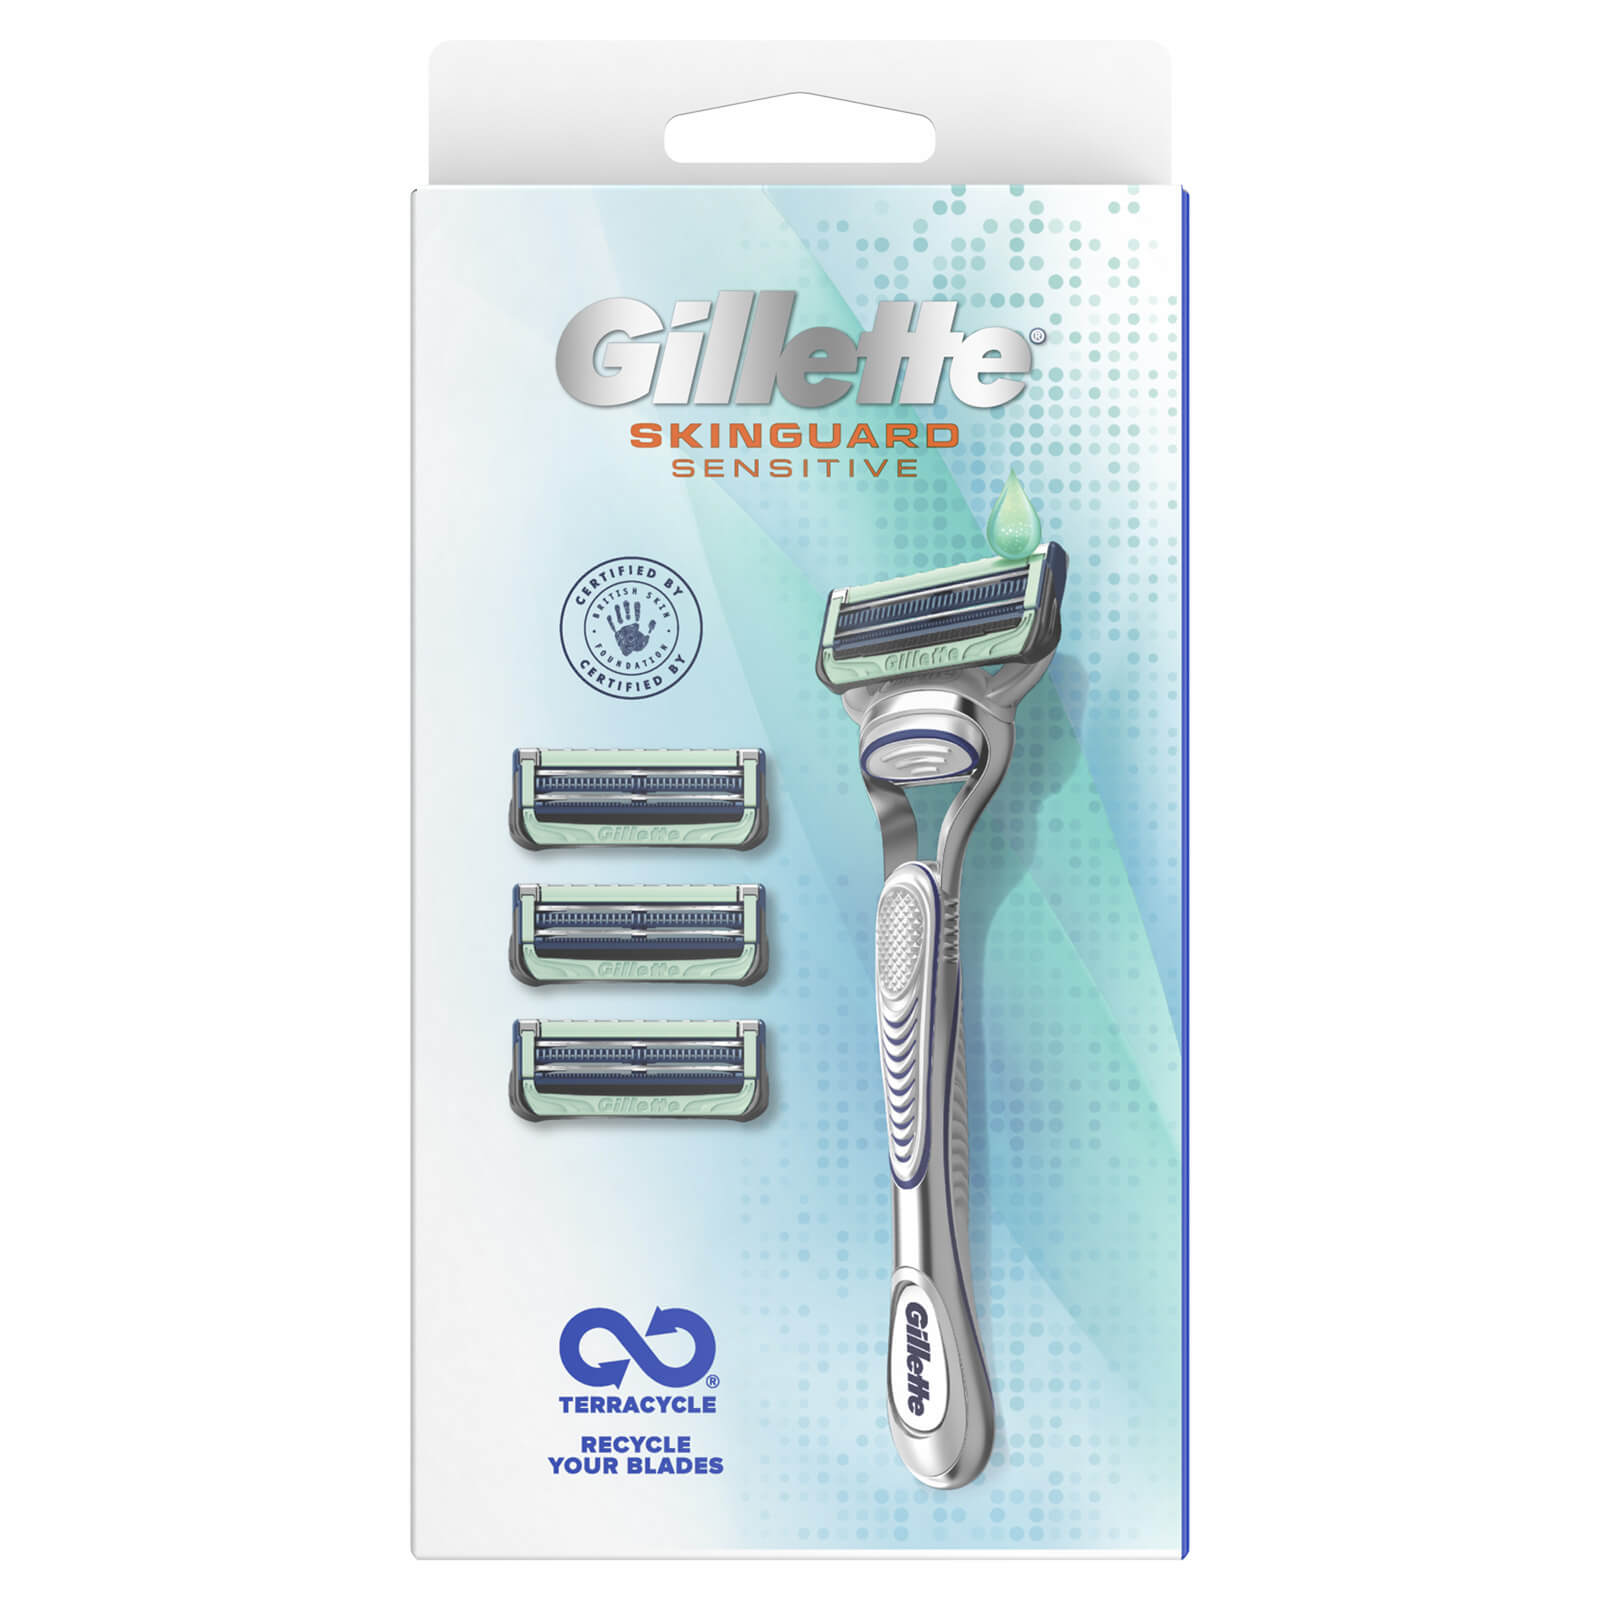 Gillette SkinGuard Sensitive Razor - Razor + 3 Blades